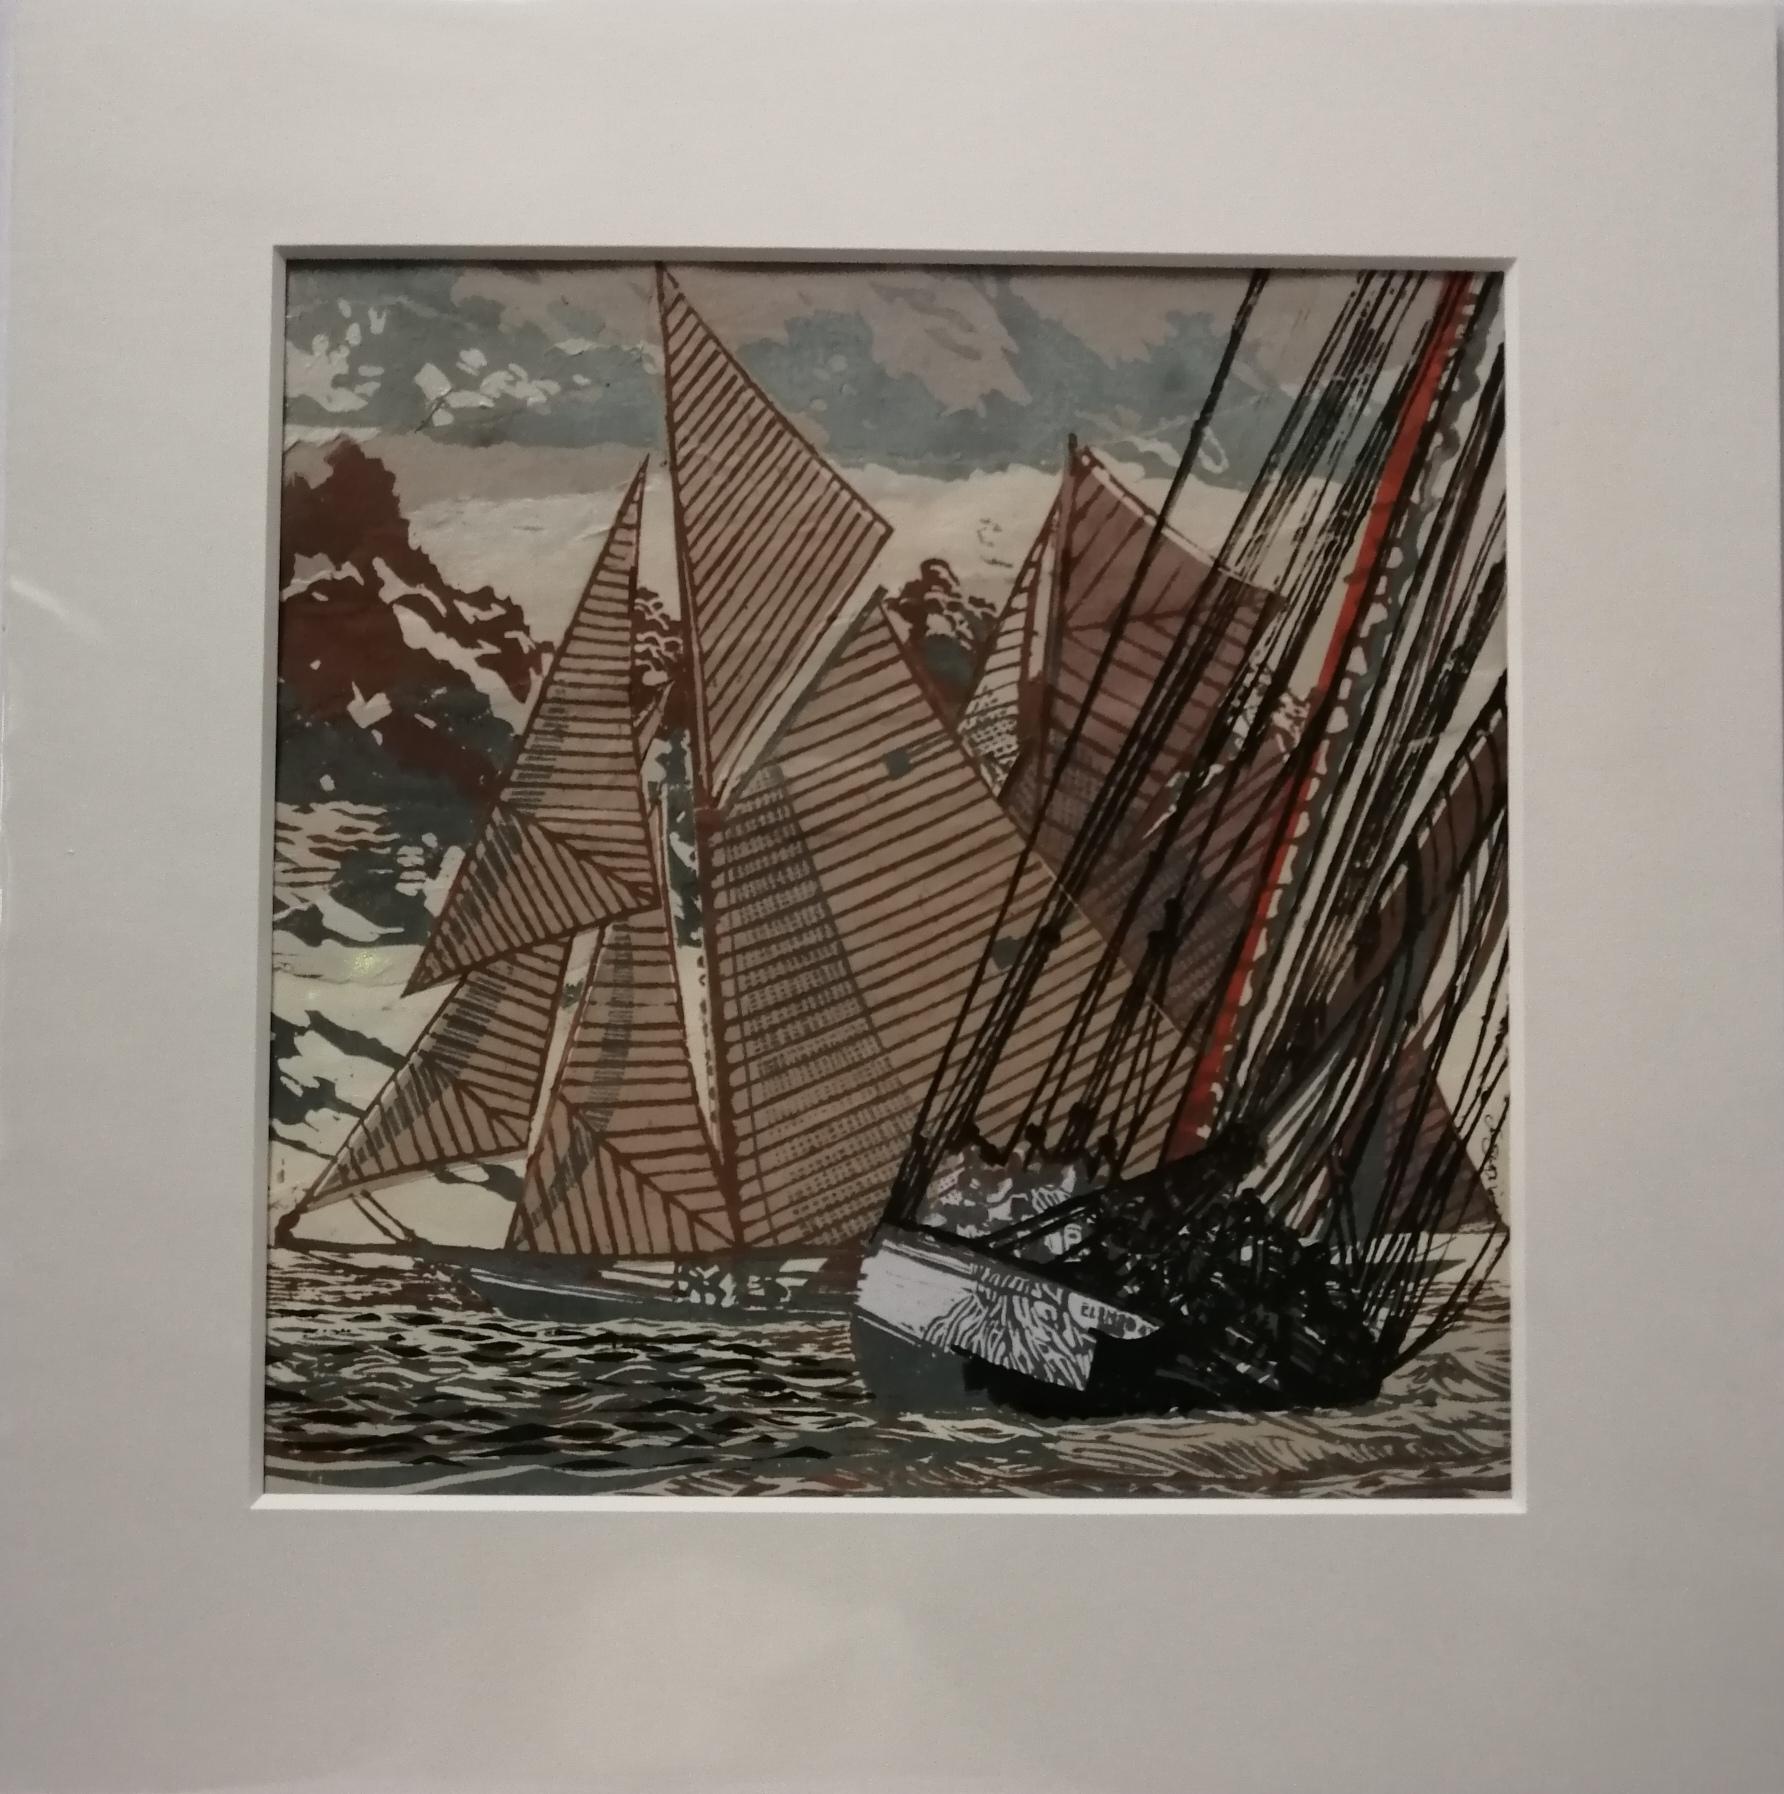 Going About by John Scott Martin, sailing, boat, seaside, seascape, linocut 